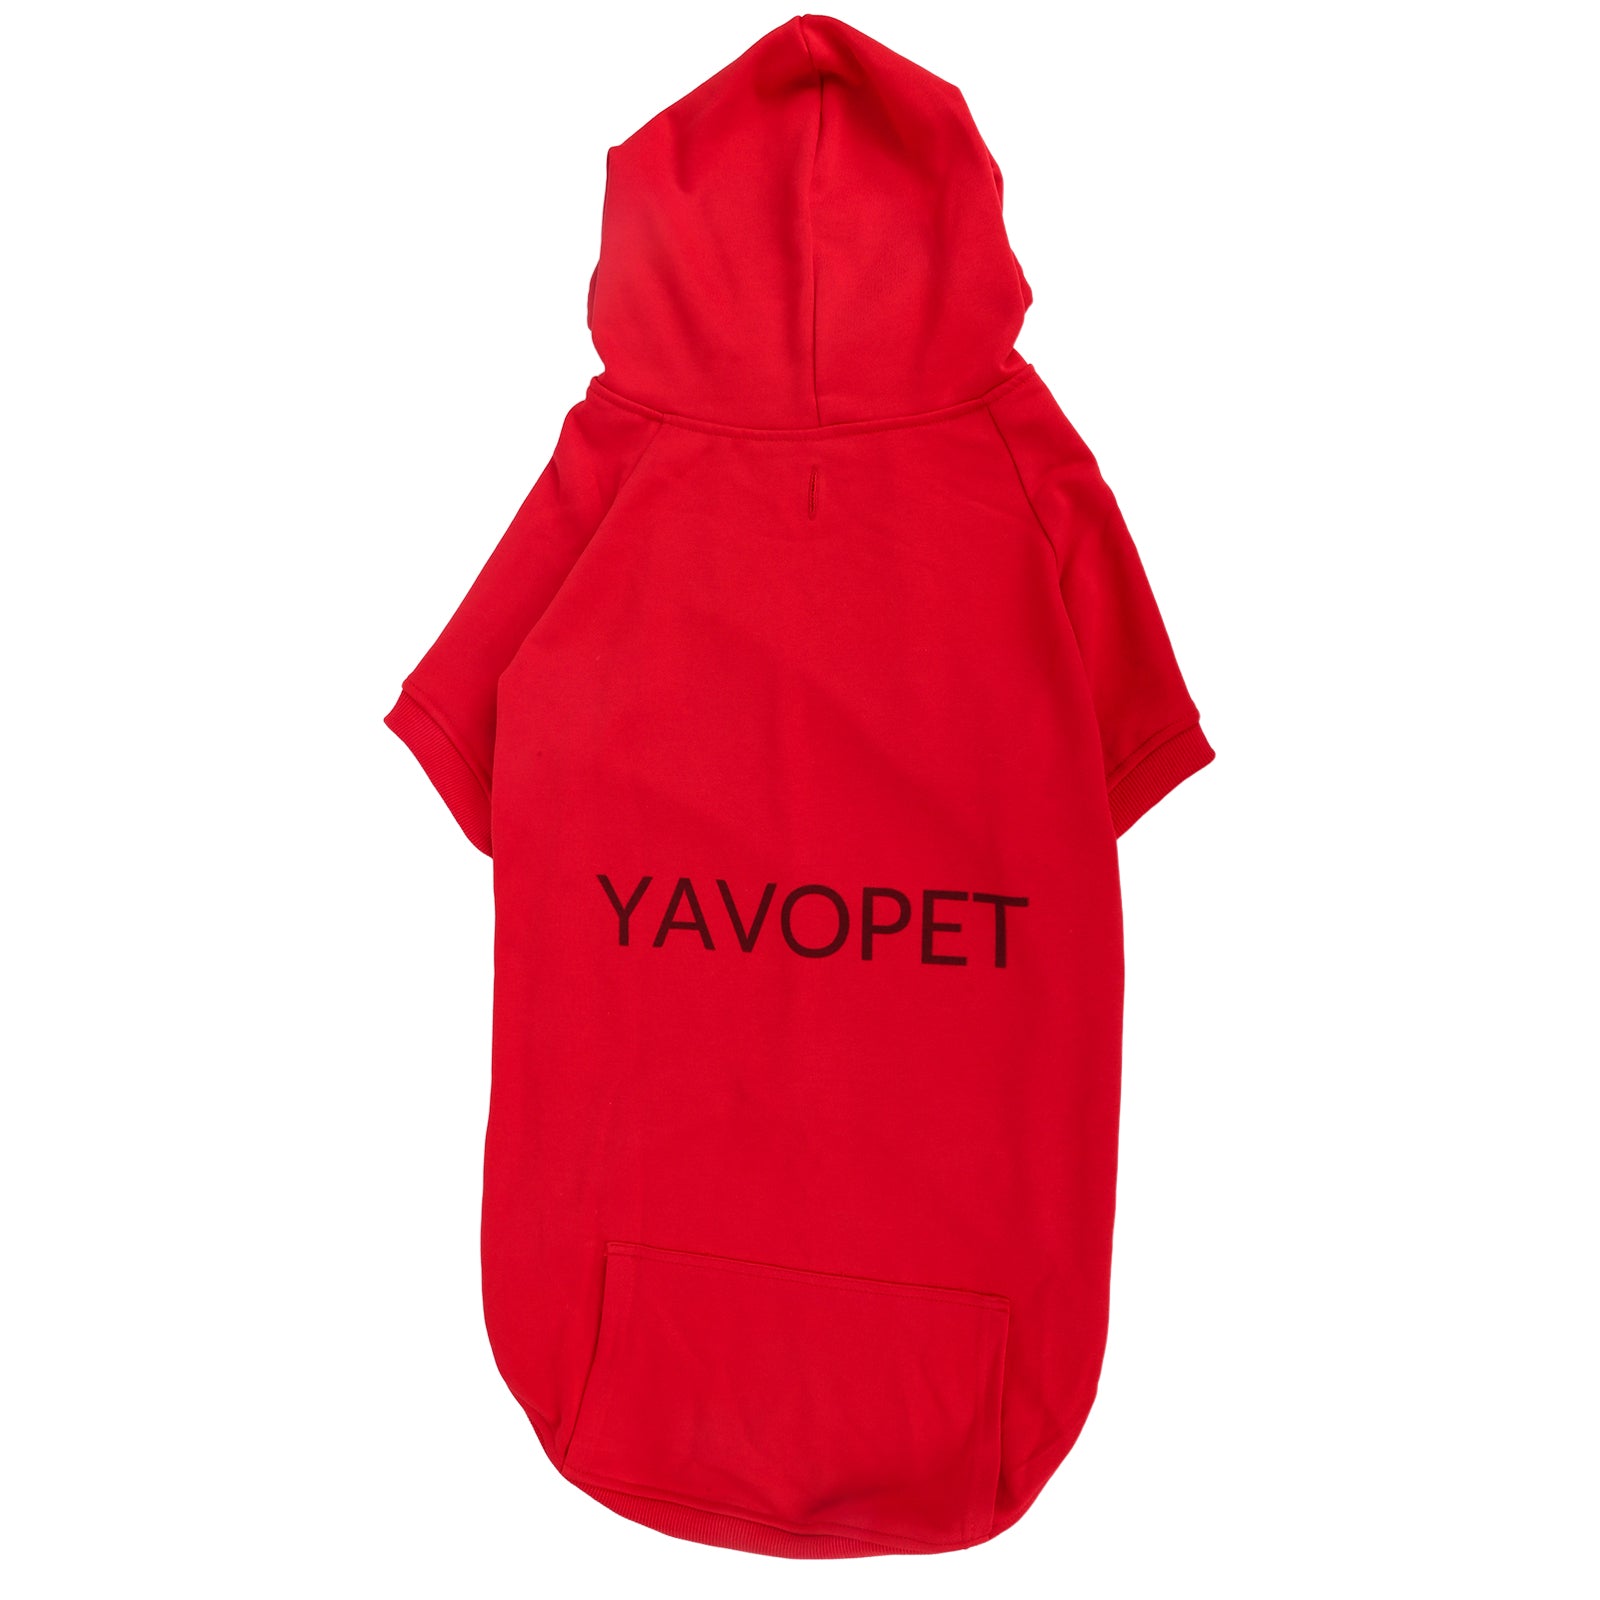 YAVOPET Cotton Hoodies